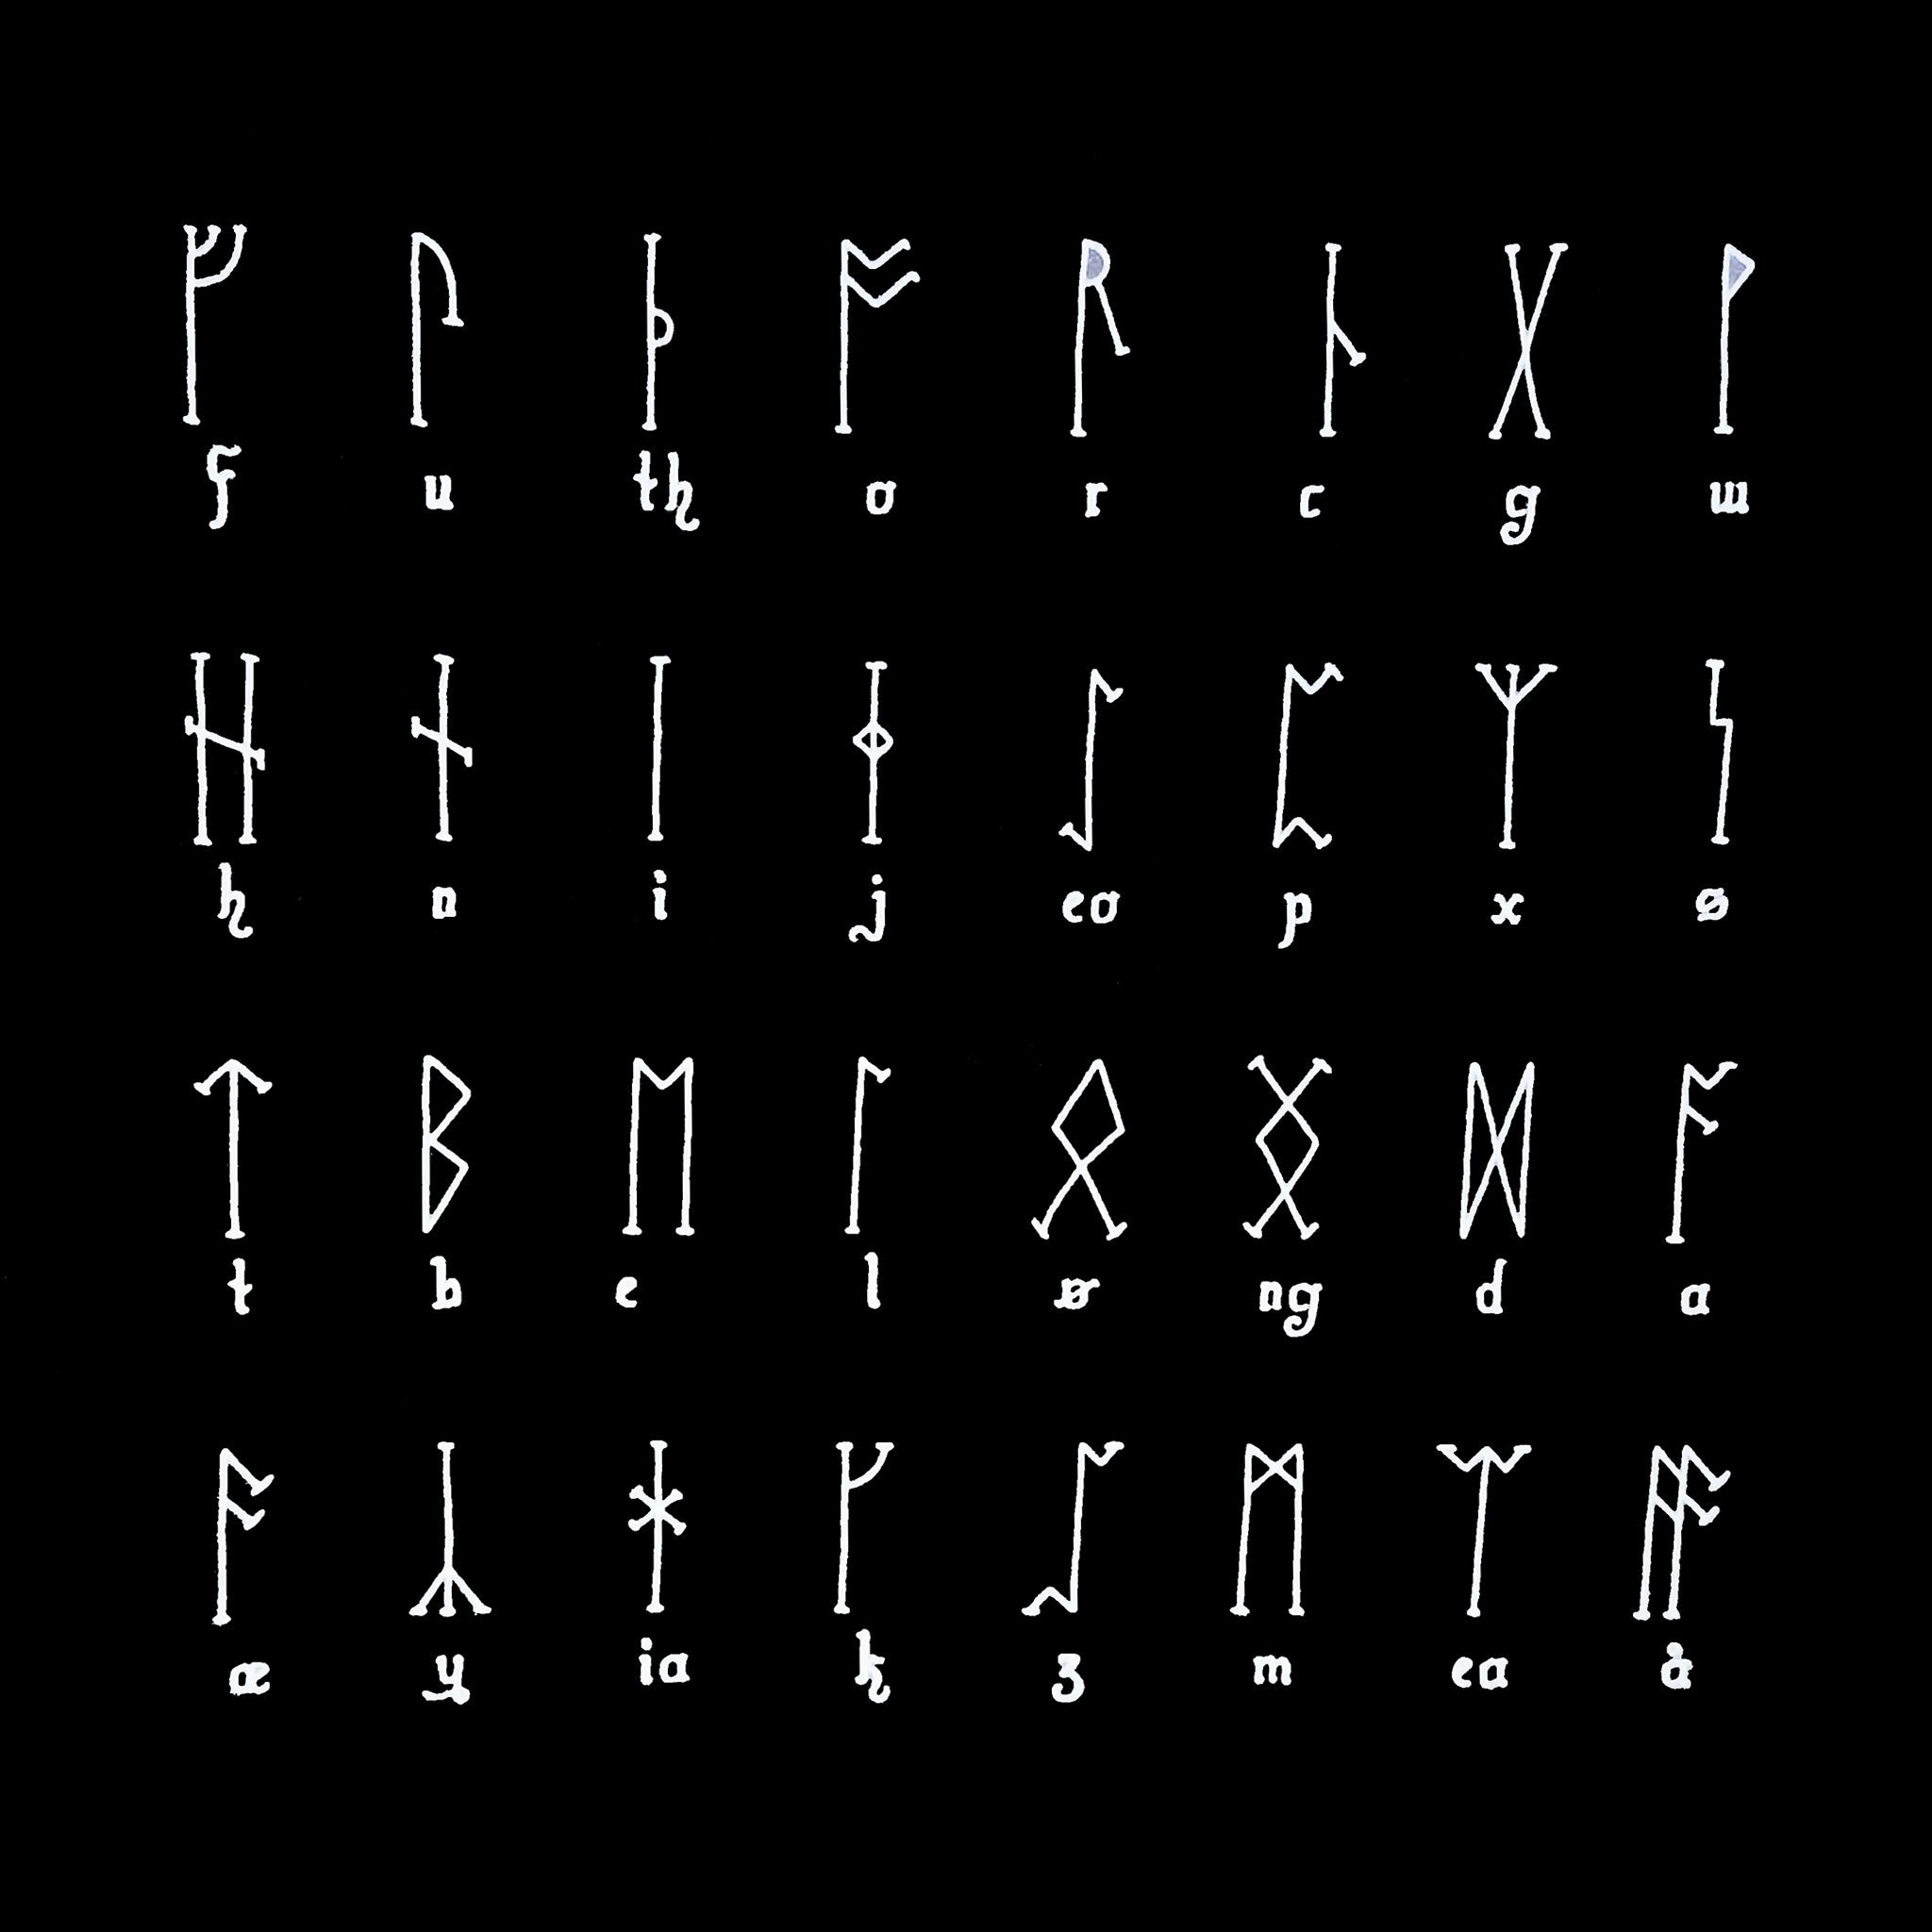 Drif CD by Heilung - Elder Futhark Runes